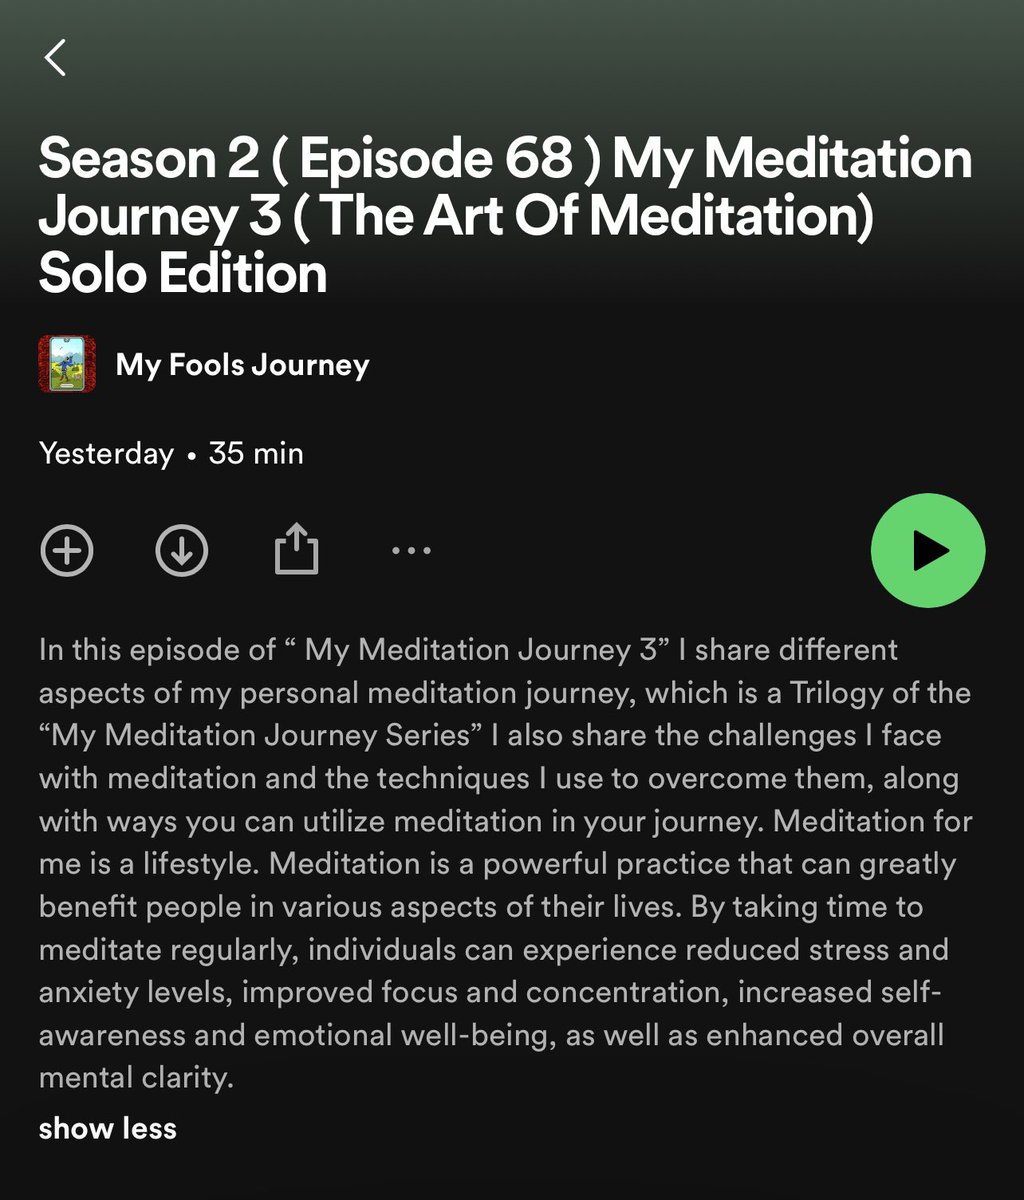 New Episode Out Now 

Episode 68 

“My Meditation Journey 3 “ 
“ The Art Of Meditation “

Listen & Stream “MyFoolsJourney “ On
 👇🏽👇🏽👇🏽

myfoolsjourney.lnk.to/listen

AudioPodcast Players 👇🏽👇🏽👇🏽

SpotifyPodcast,applepodcasts, Amazonpodcast,